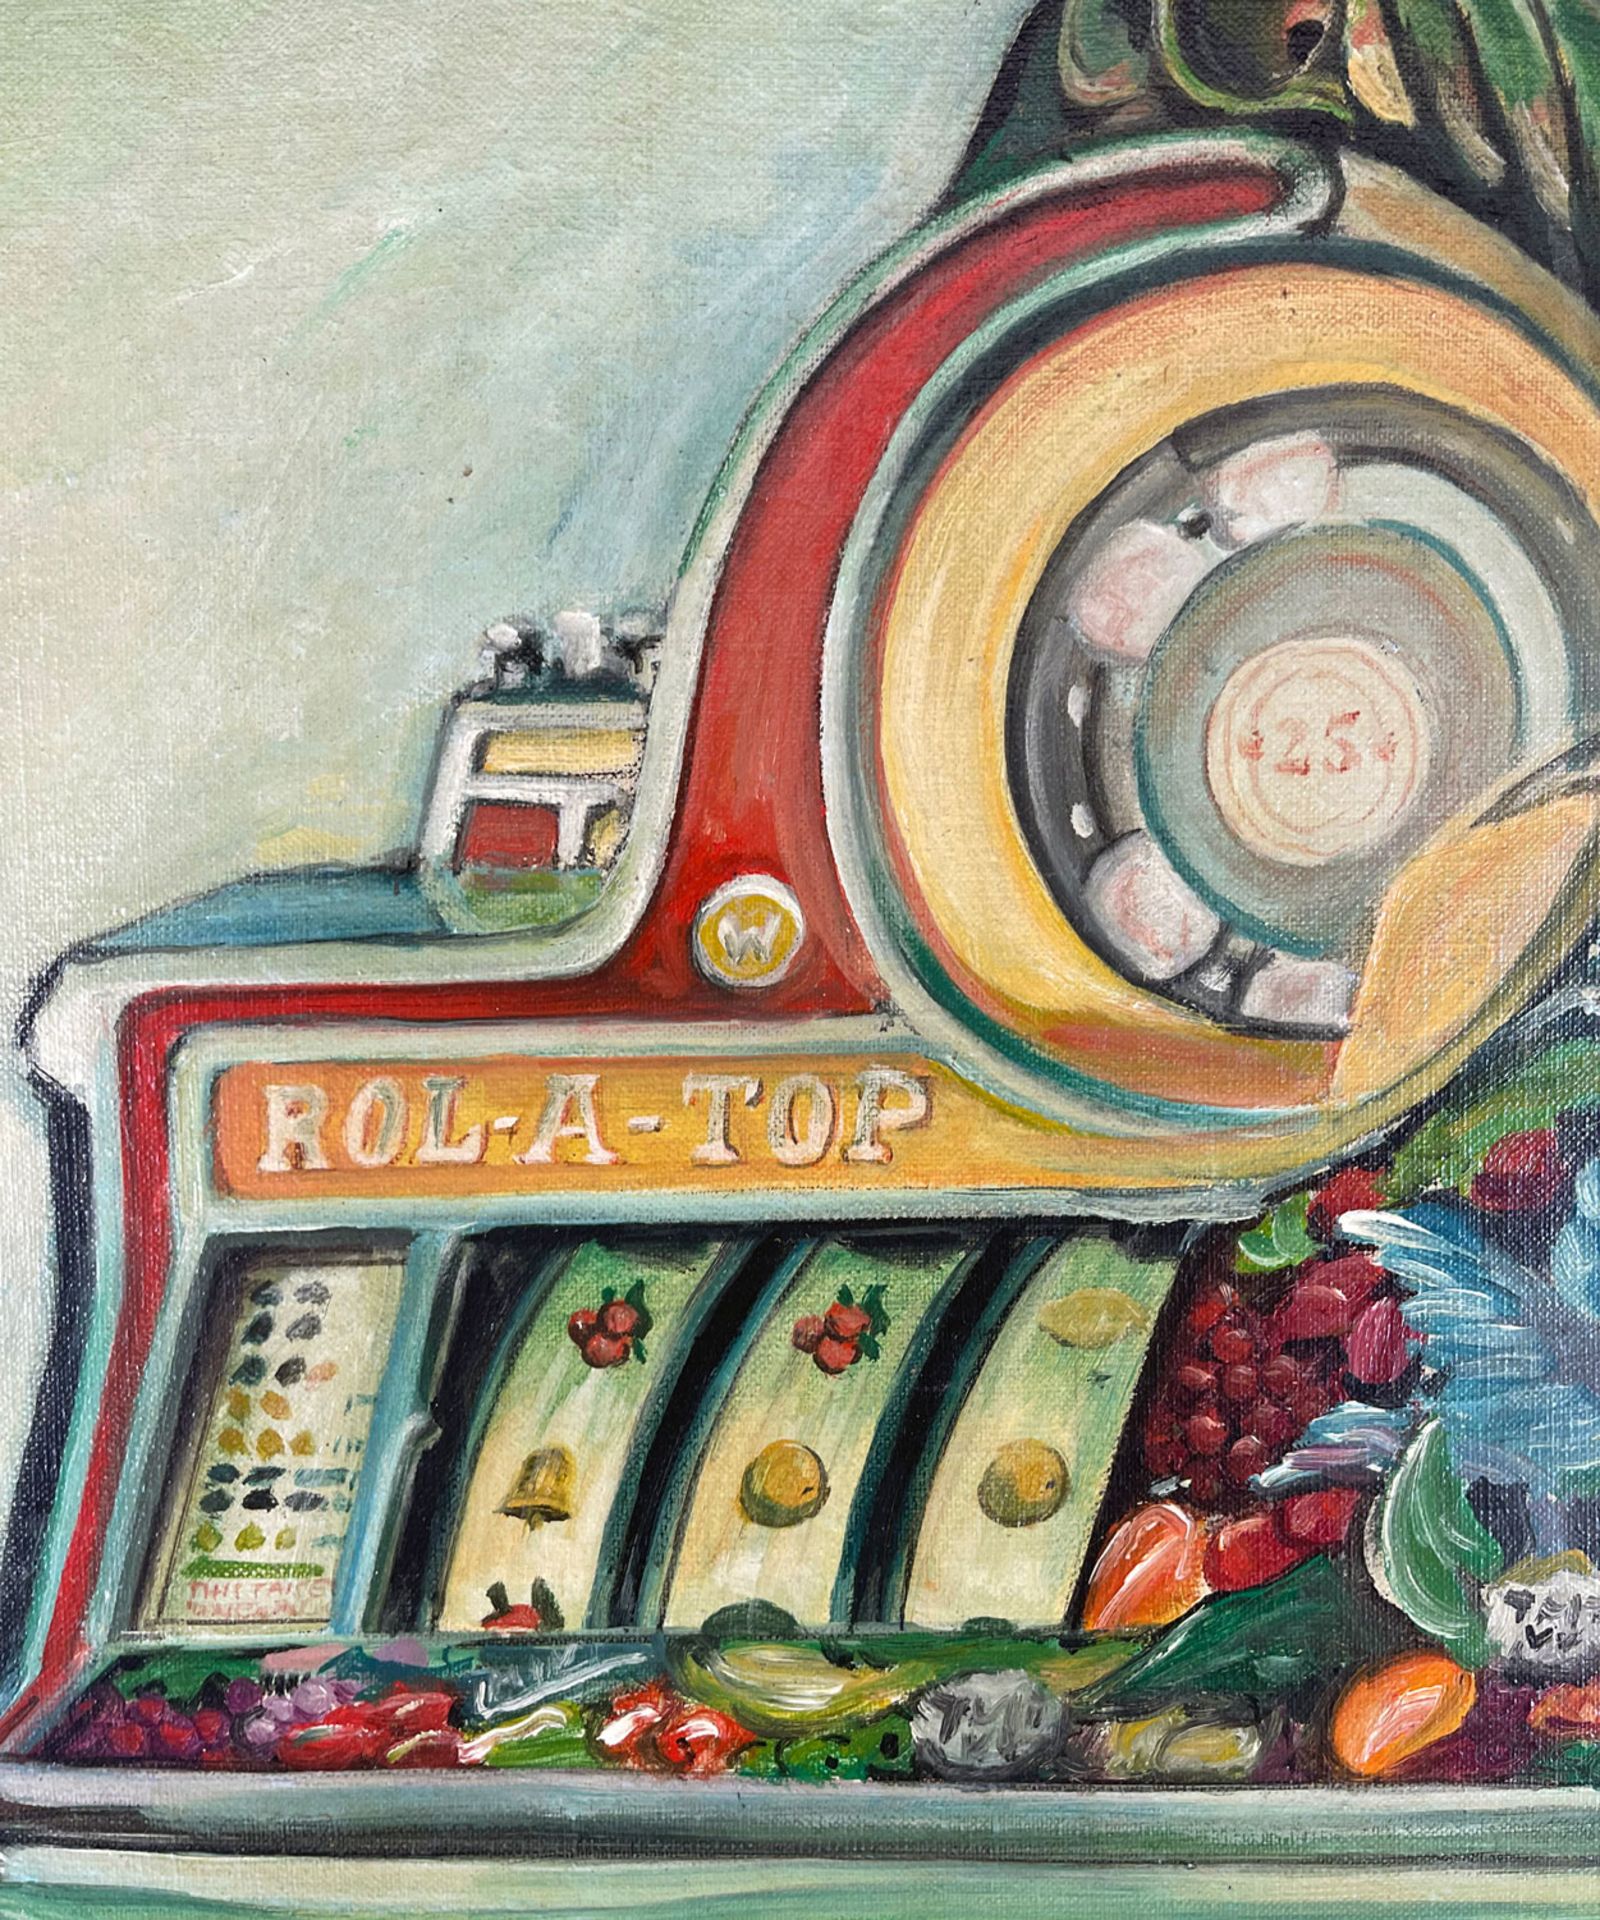 Framed J. Krivine Painting of Watling Rol-A-Top Slot Machine - Image 4 of 5